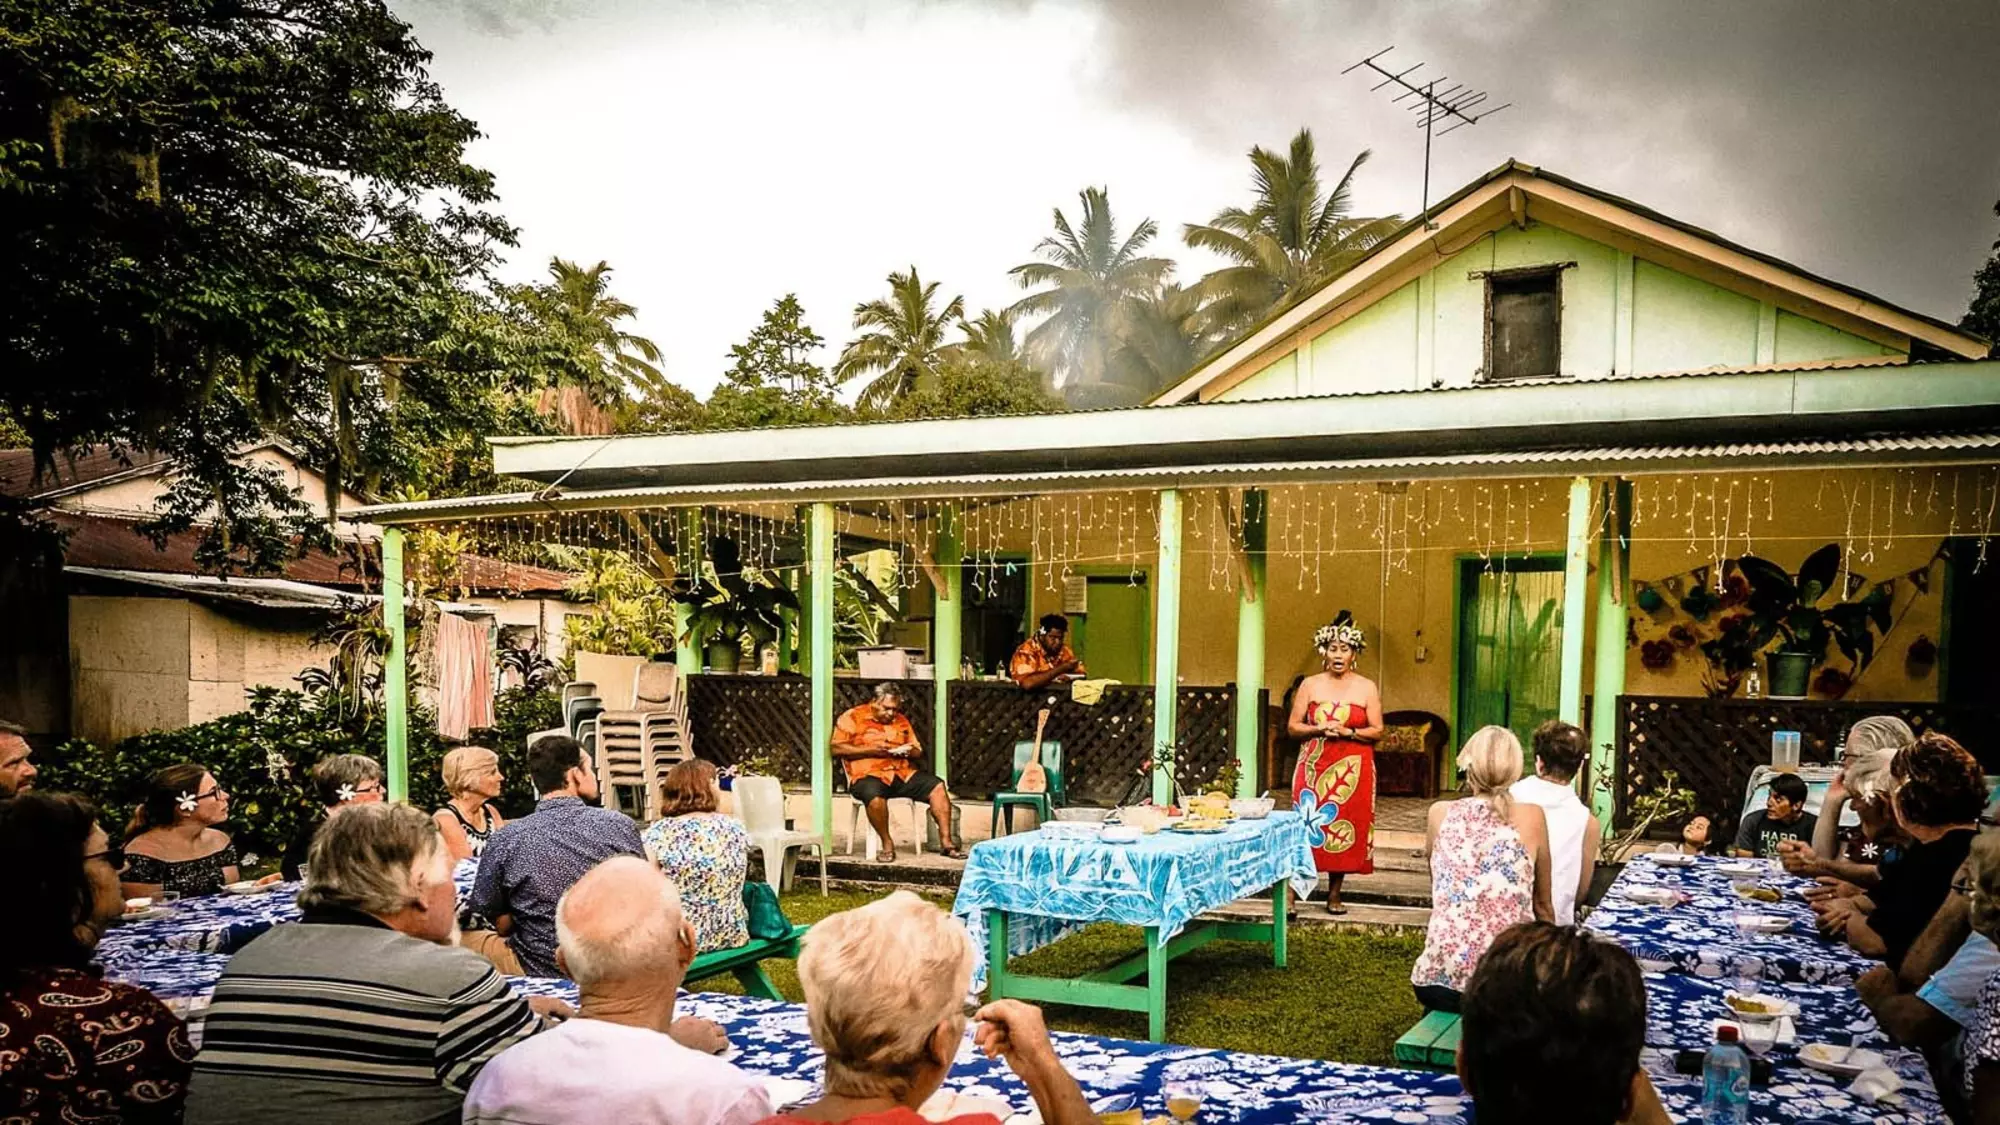 Local Home Visit at Progressive Dinner Tour in Rarotonga Cook Islands